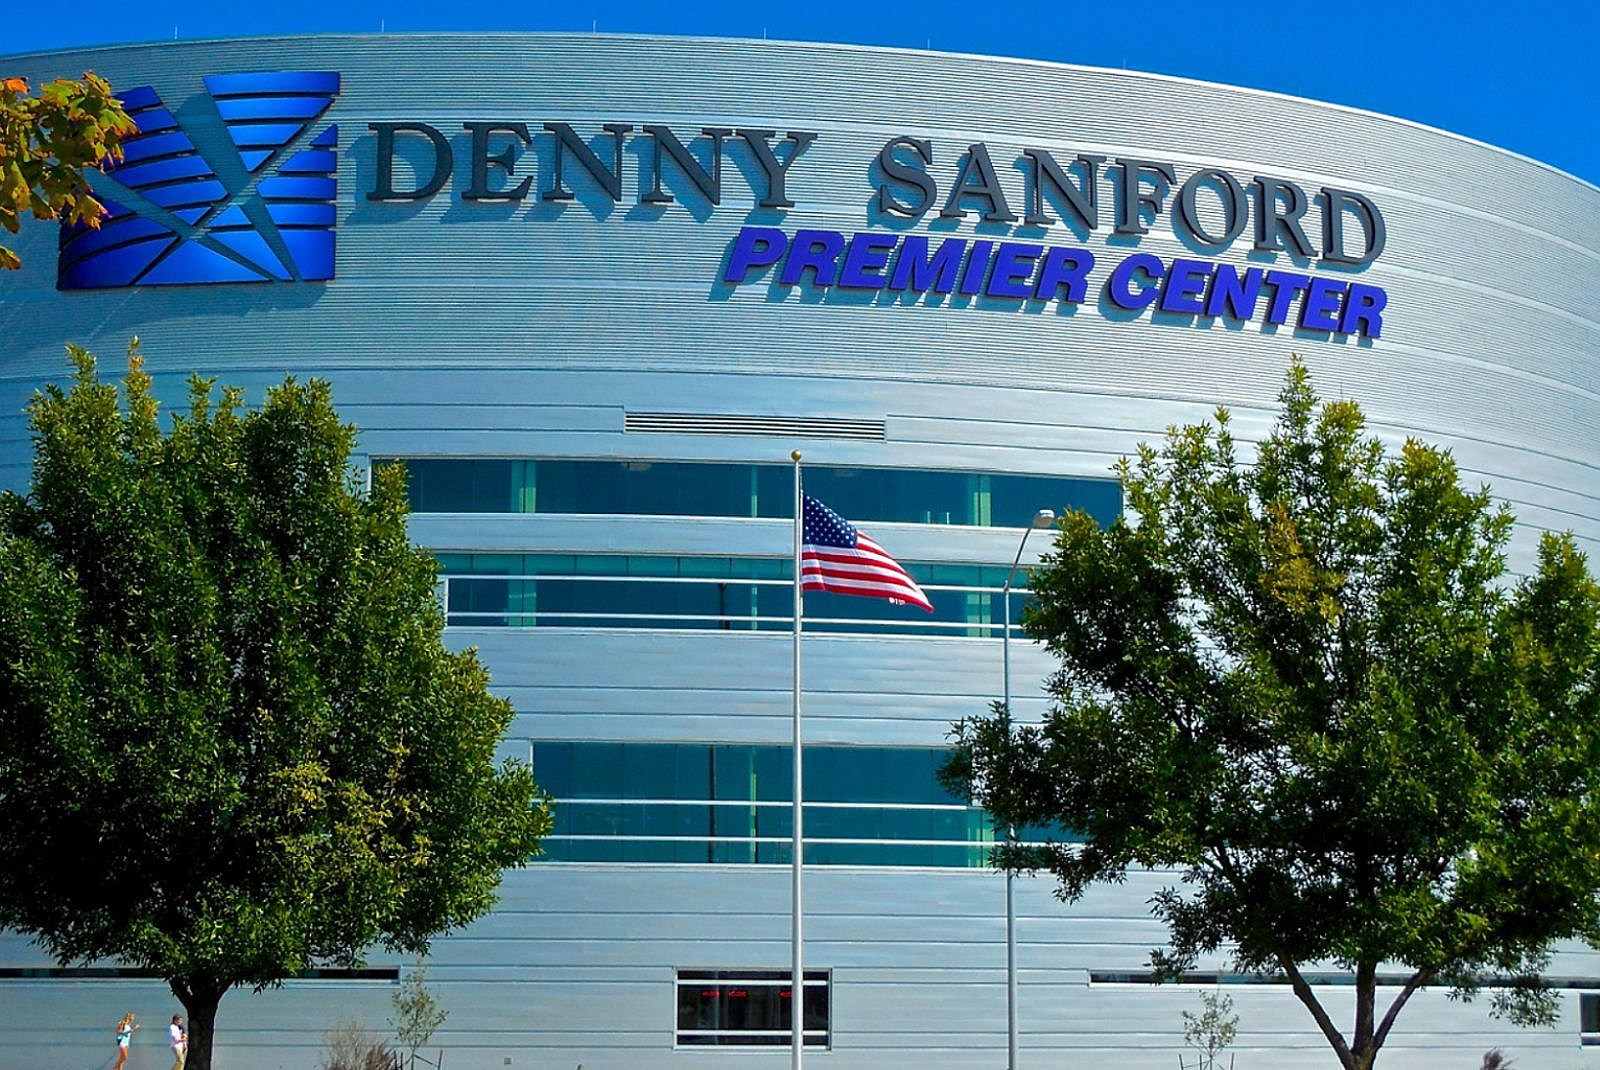 Denny Sanford Premier Center